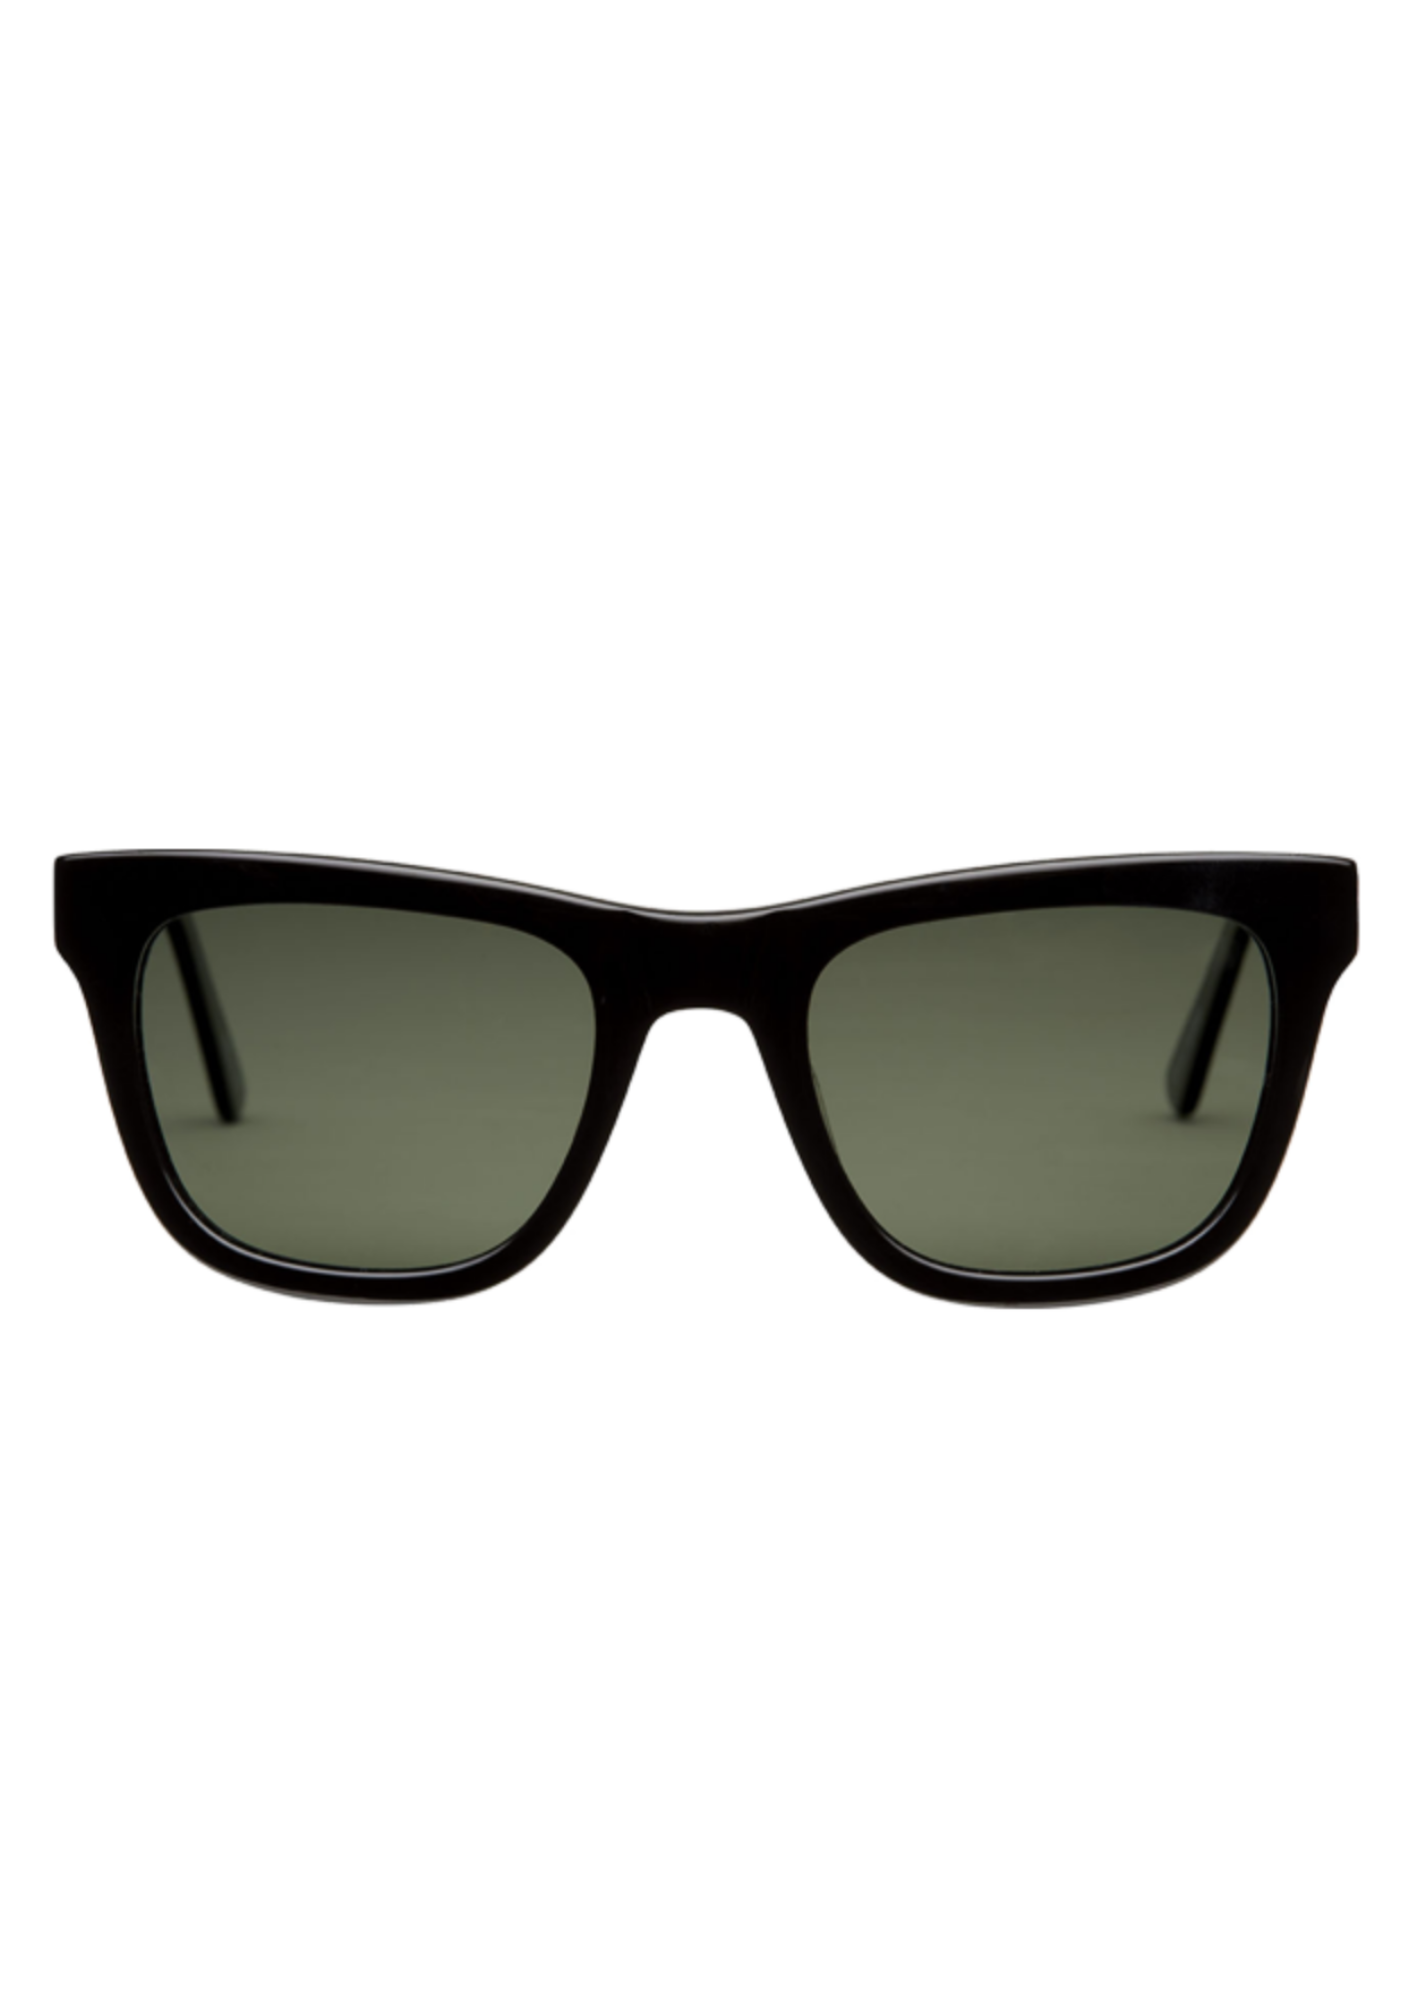 Life Less Common - Venice Black Sunglasses